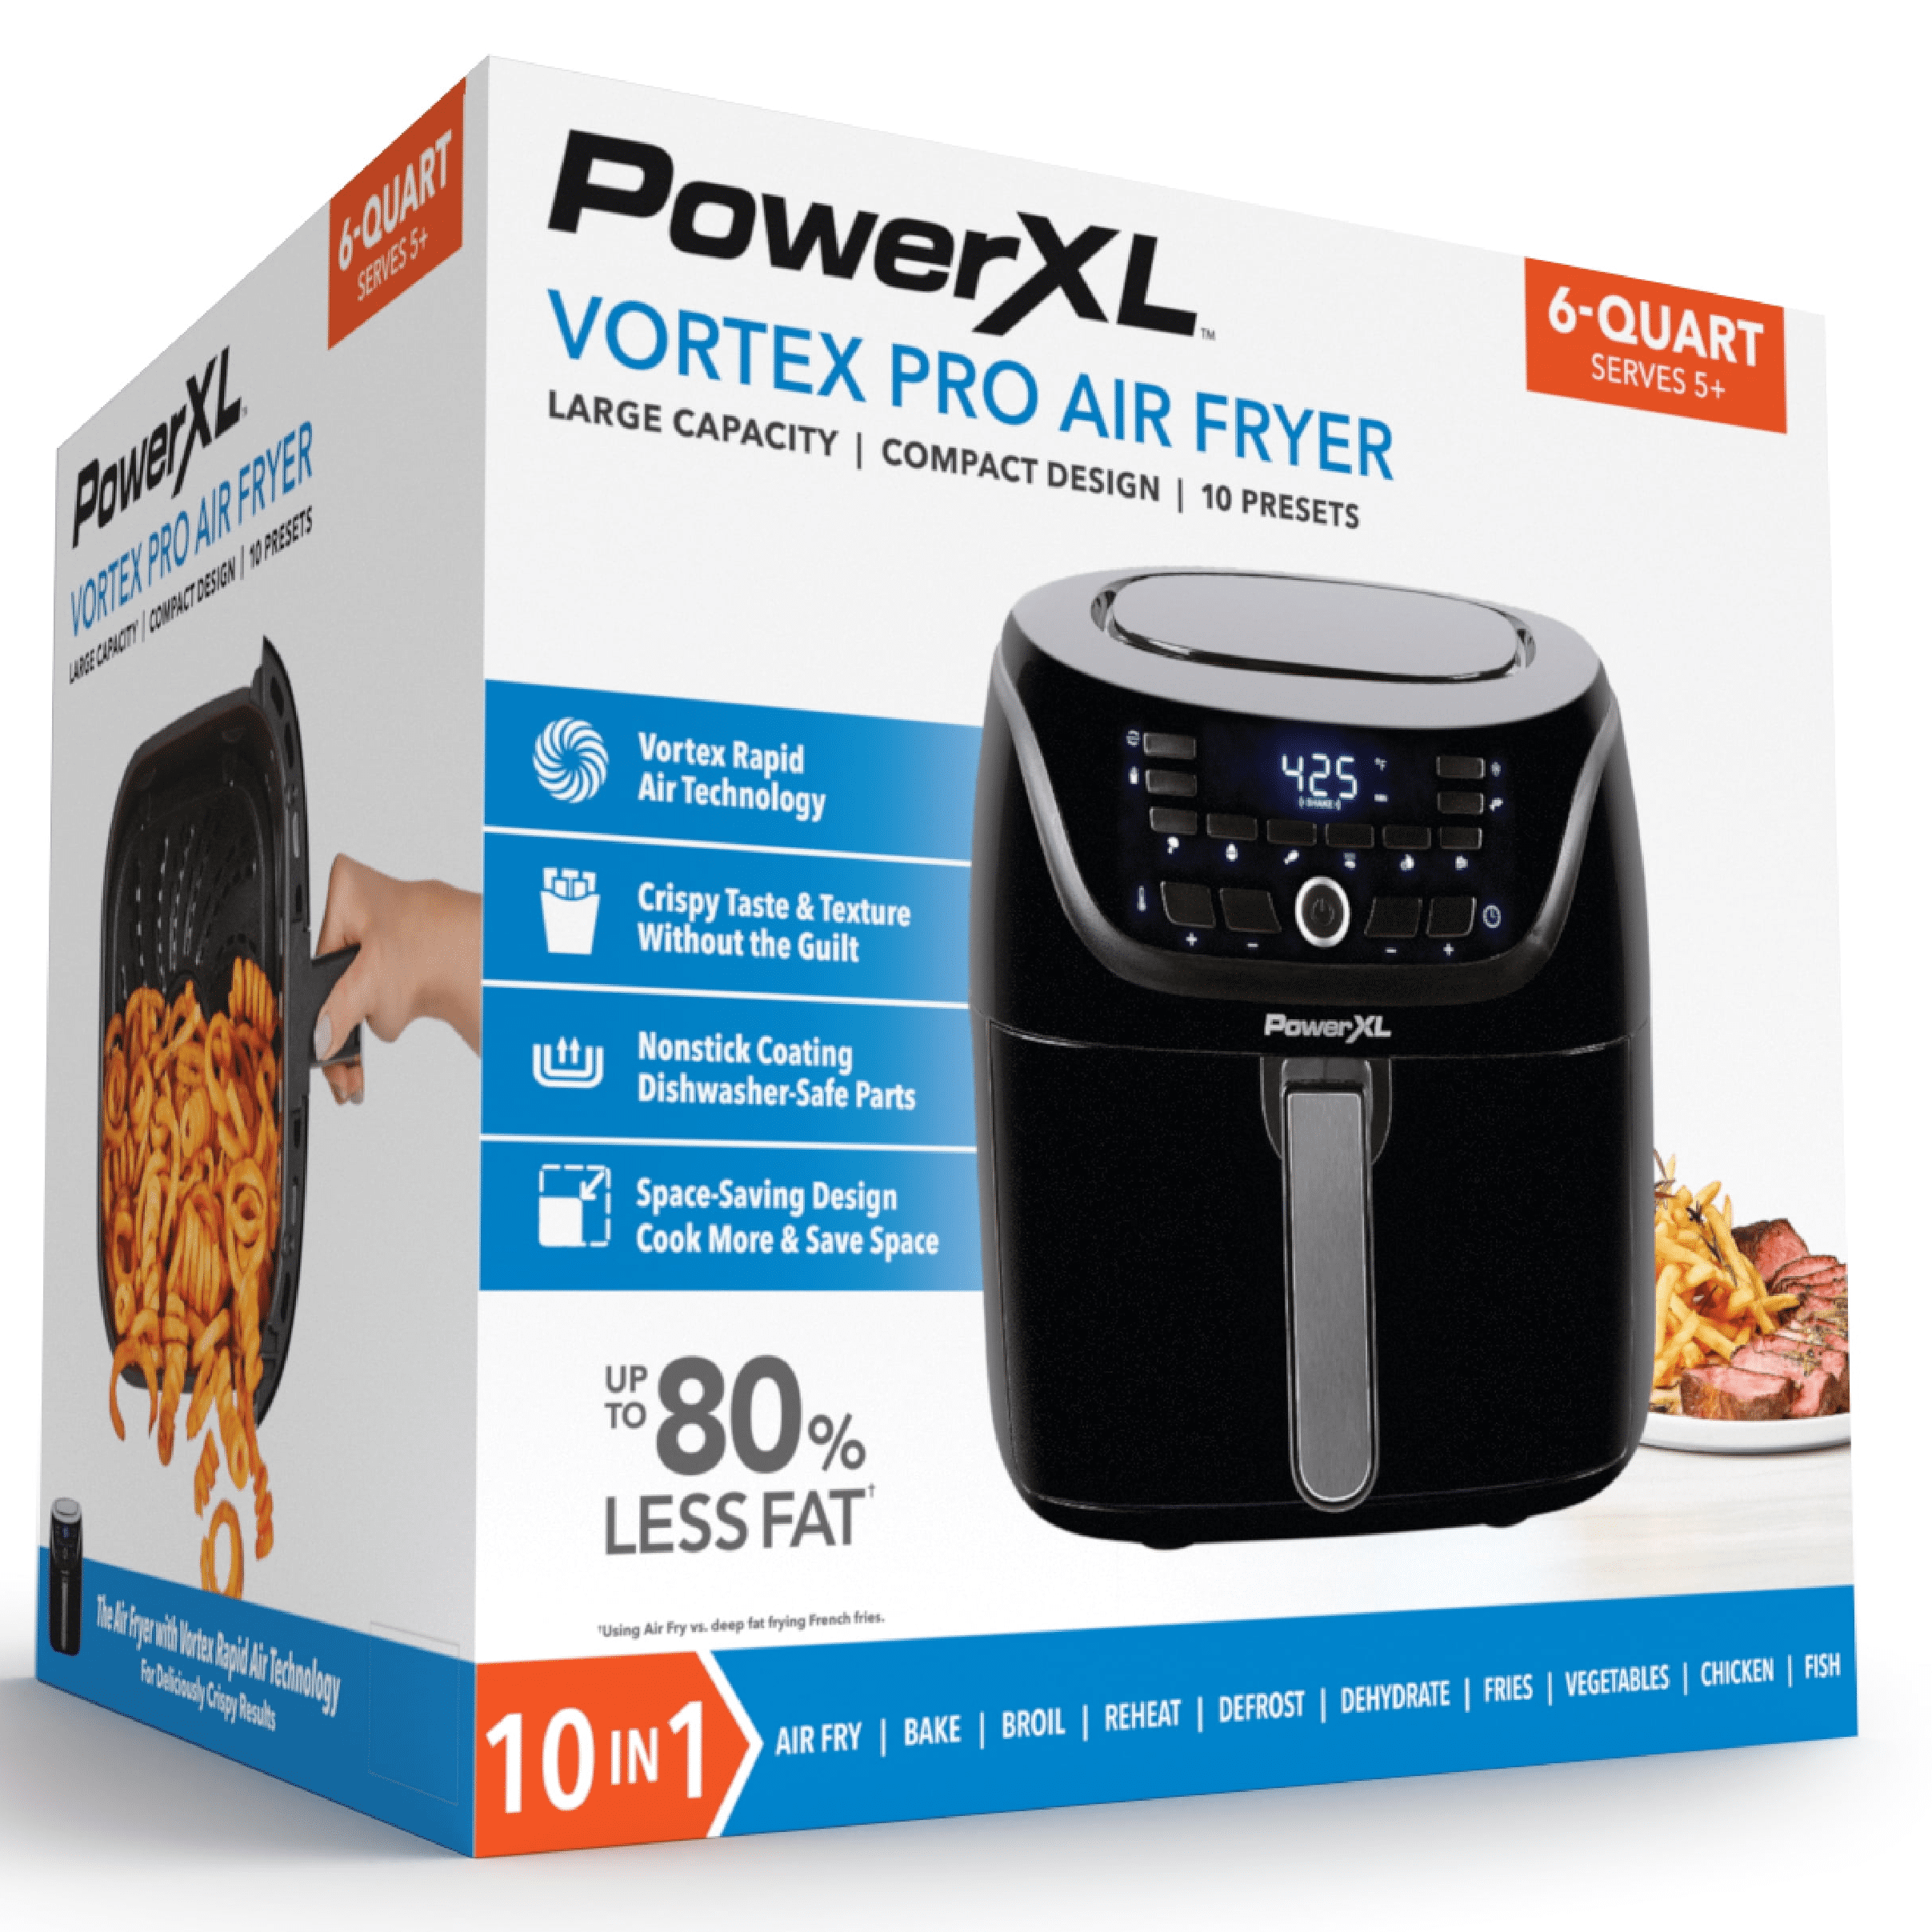 Fingerhut - PowerXL Vortex Pro 6-Qt. Air Fryer - Black